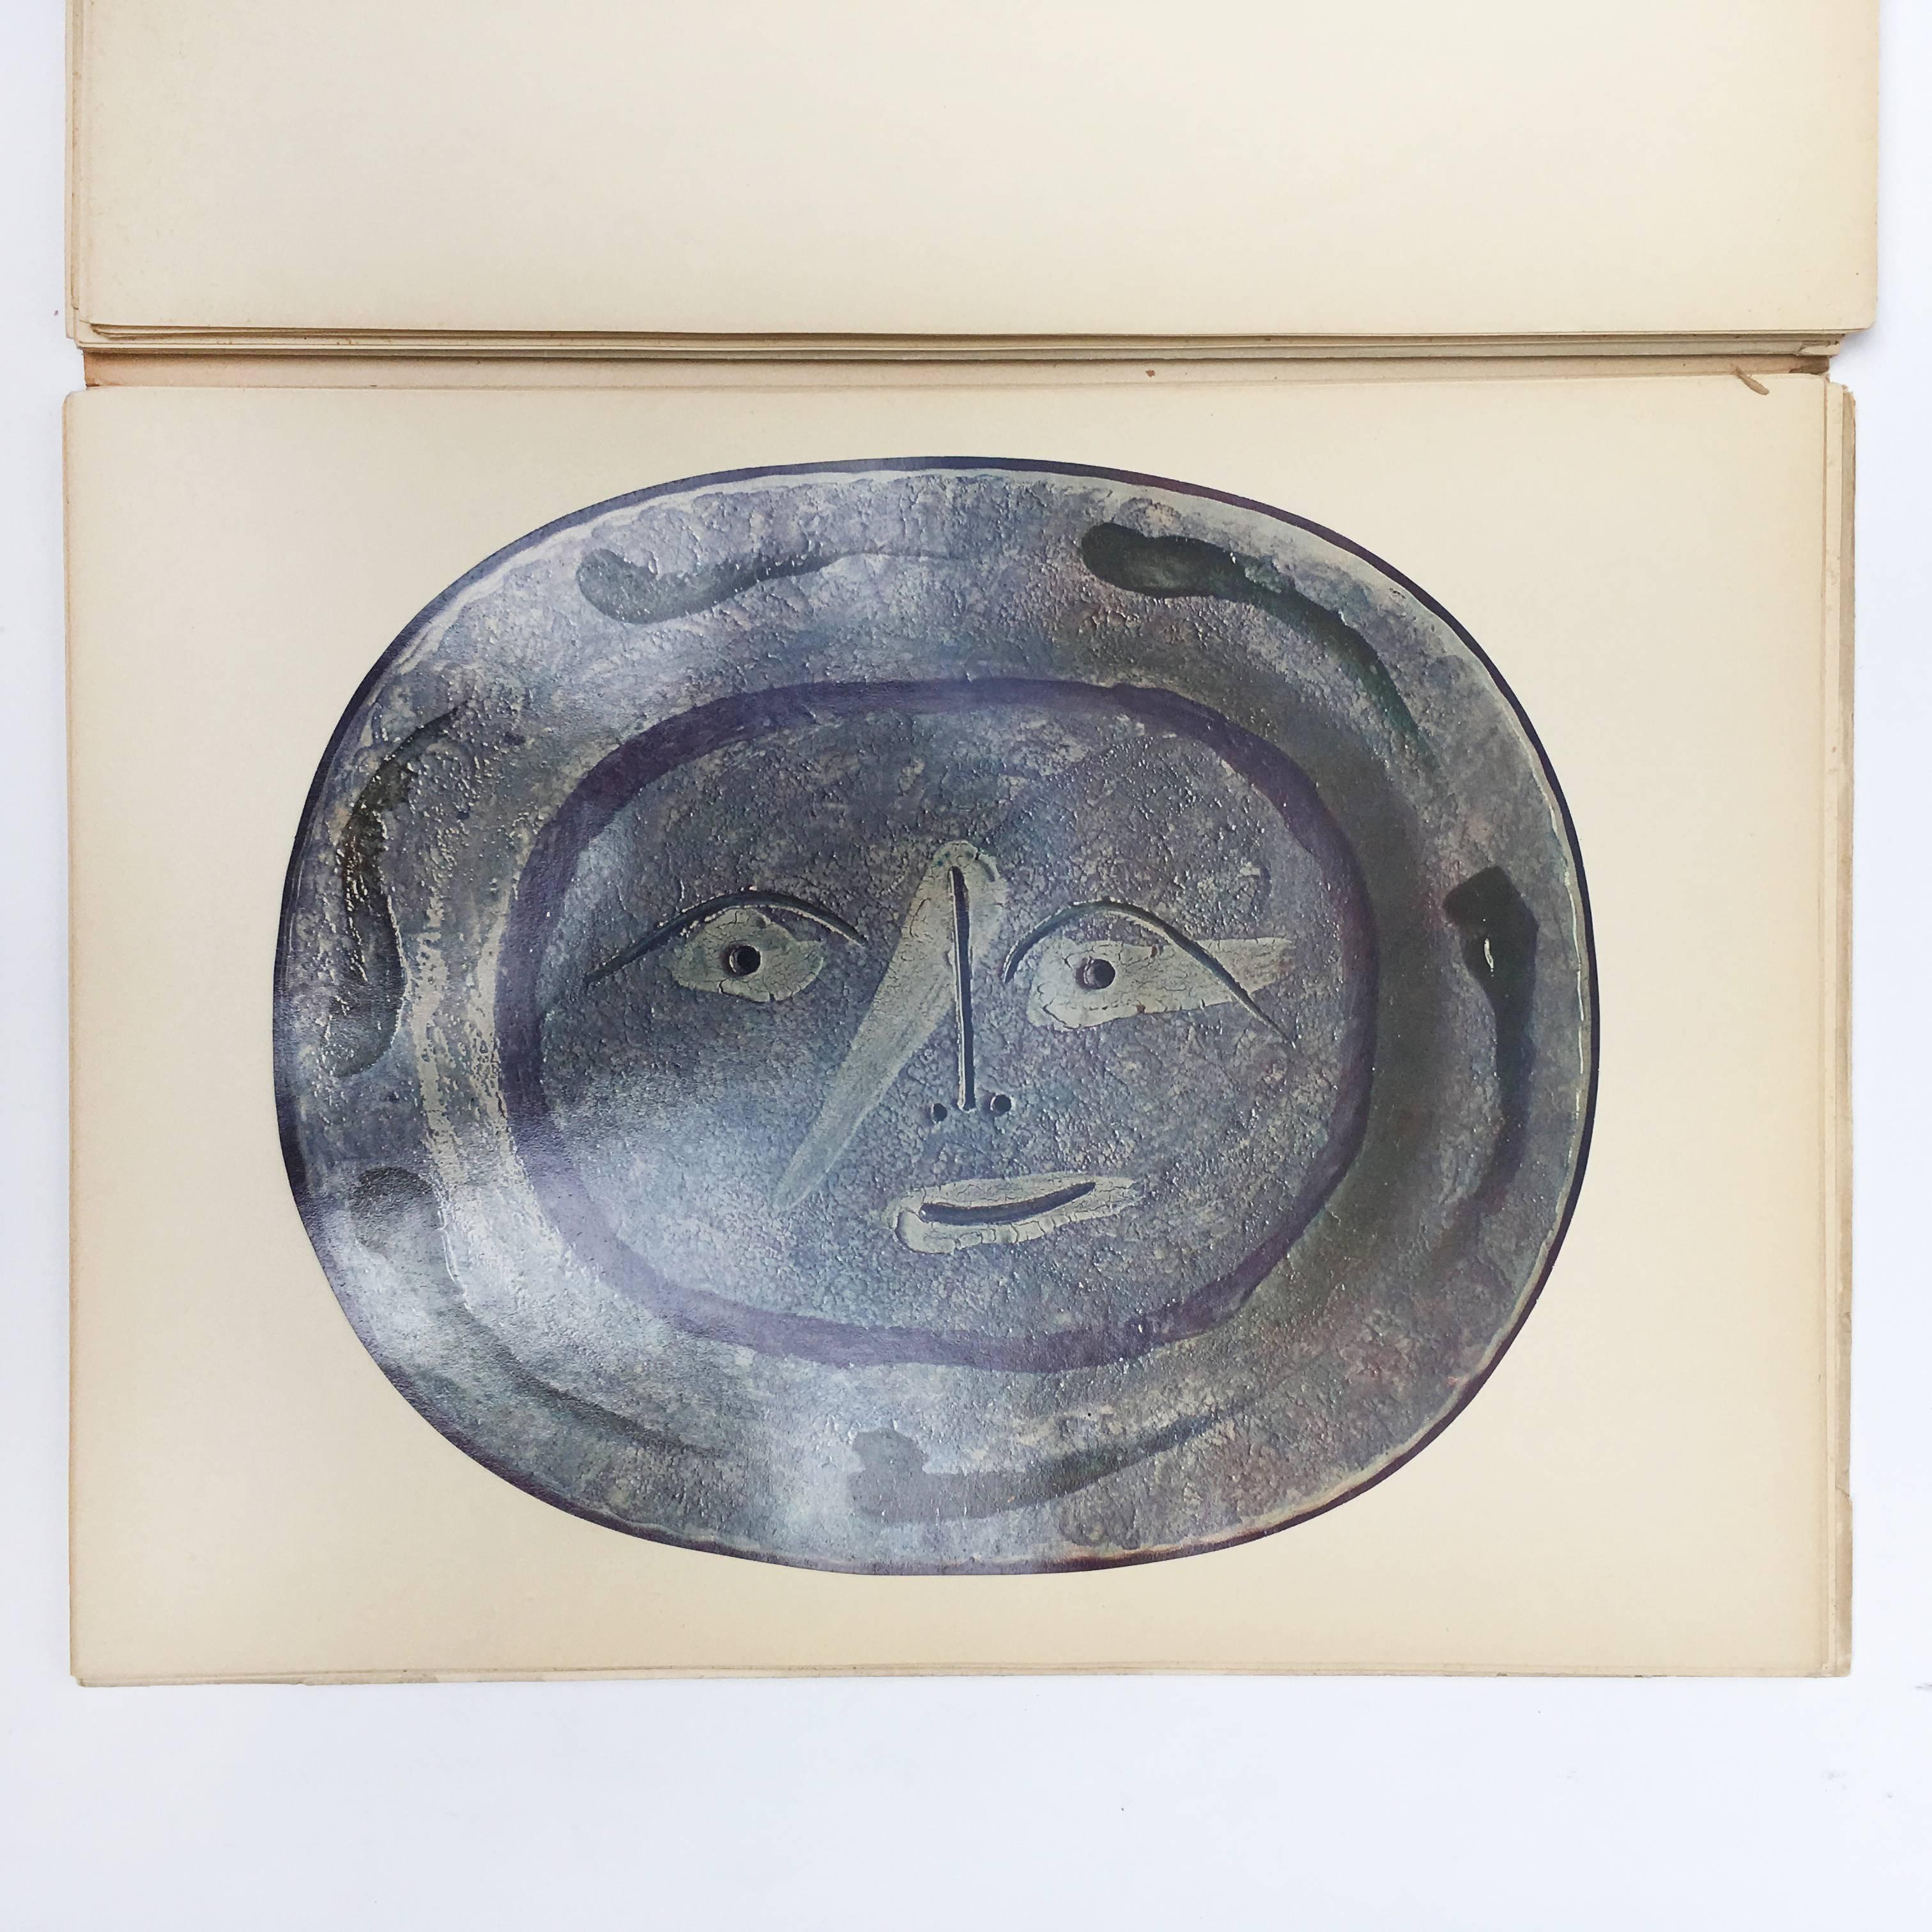 Paper Picasso Ceramics, Book 1st English Language Edition, 1950